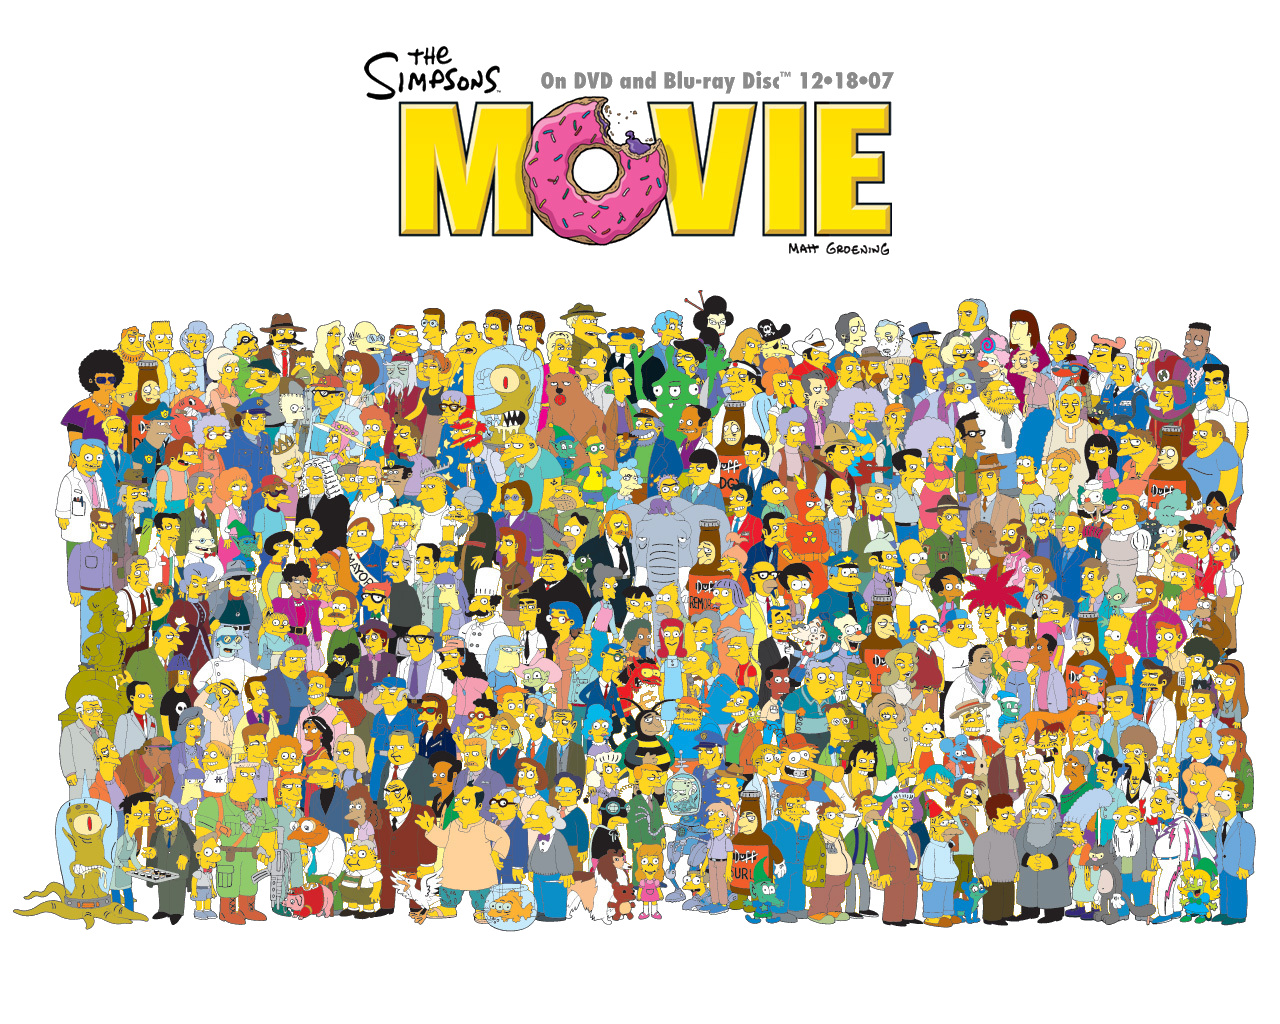 "The Simpsons Movie" desktop wallpaper 2 (1280 x 1024 pixels)